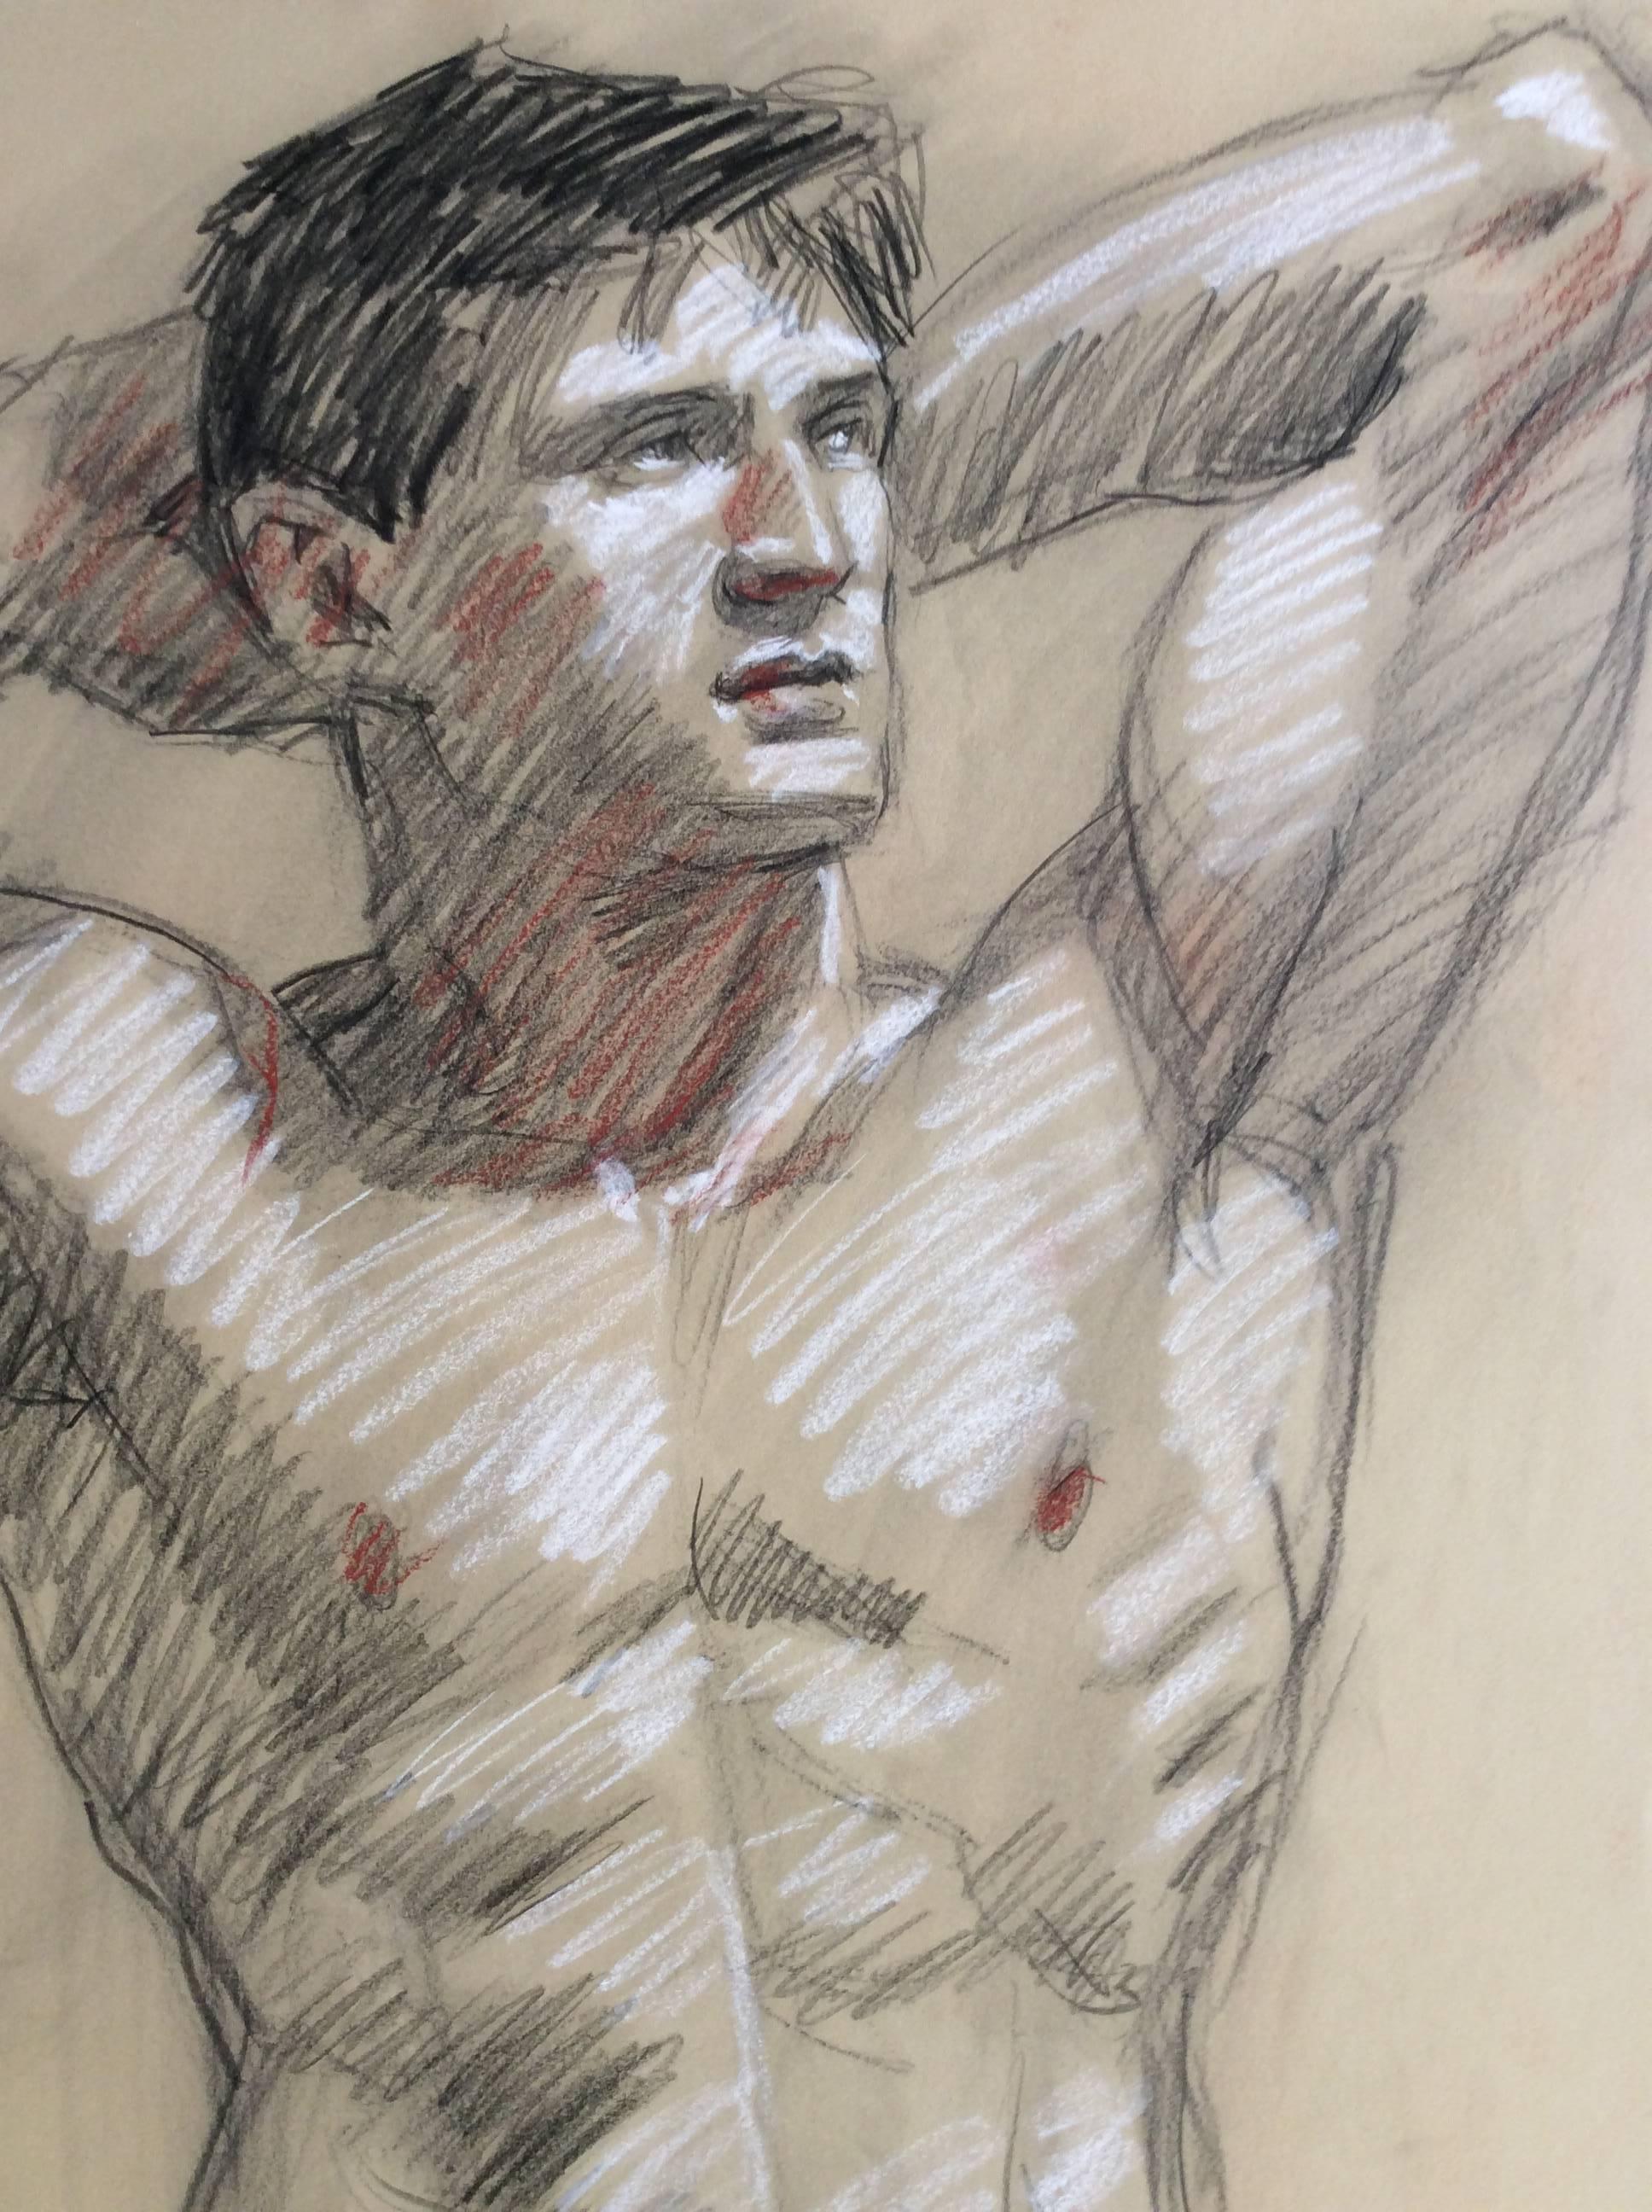 Motif figuratif masculin contemporain d'un nu, fusain sur papier MB 821 A - Art de Mark Beard